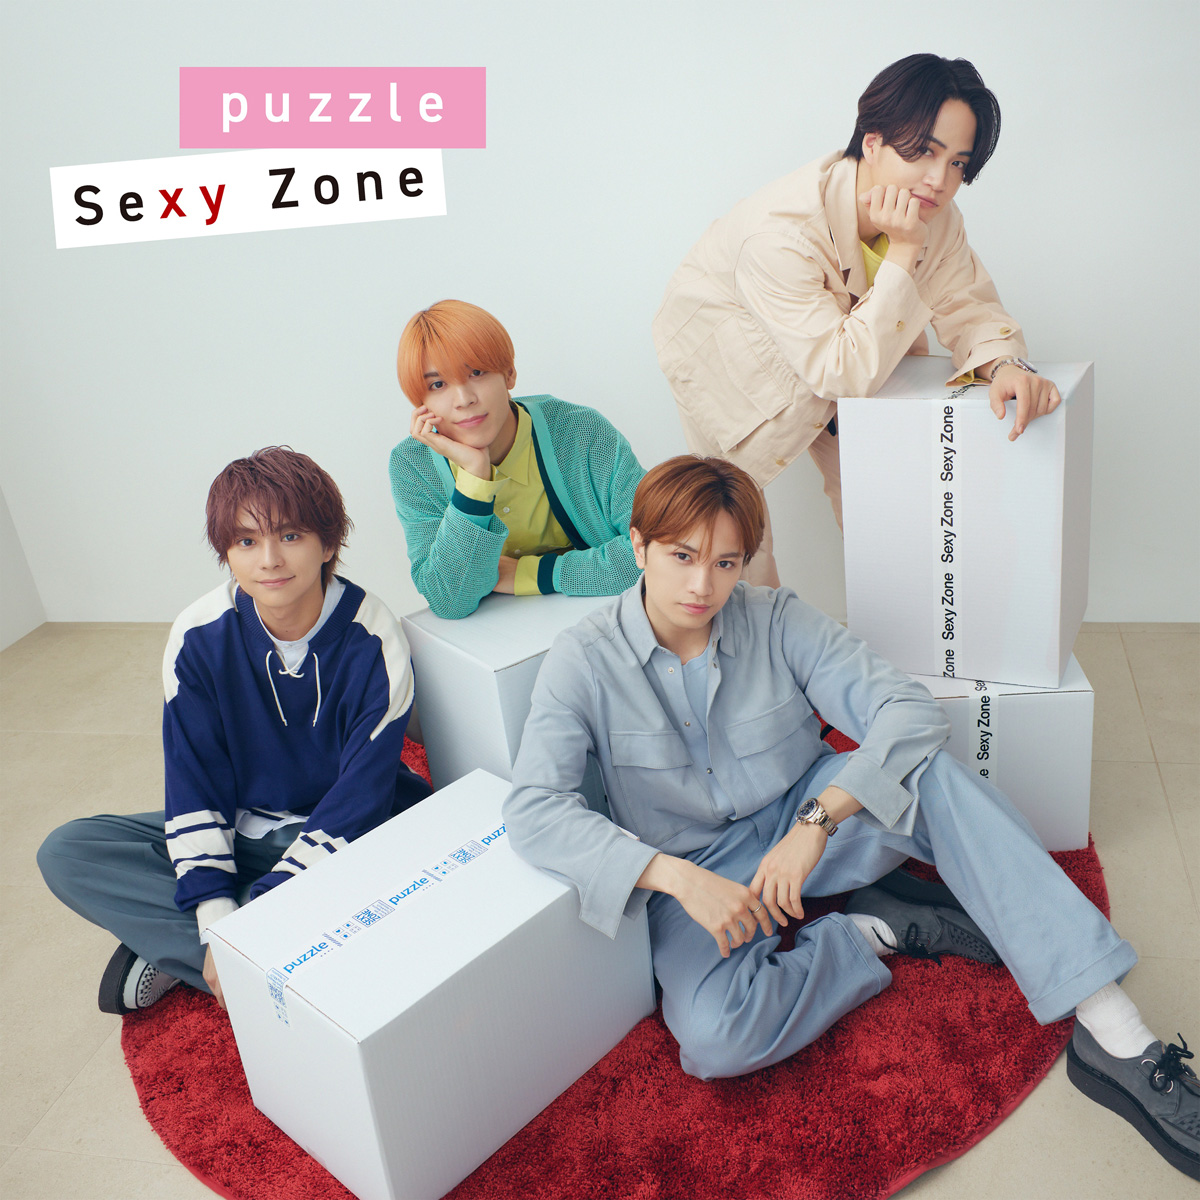 Sexy Zone 「puzzle」オリコン週間1位!デビューから26作連続